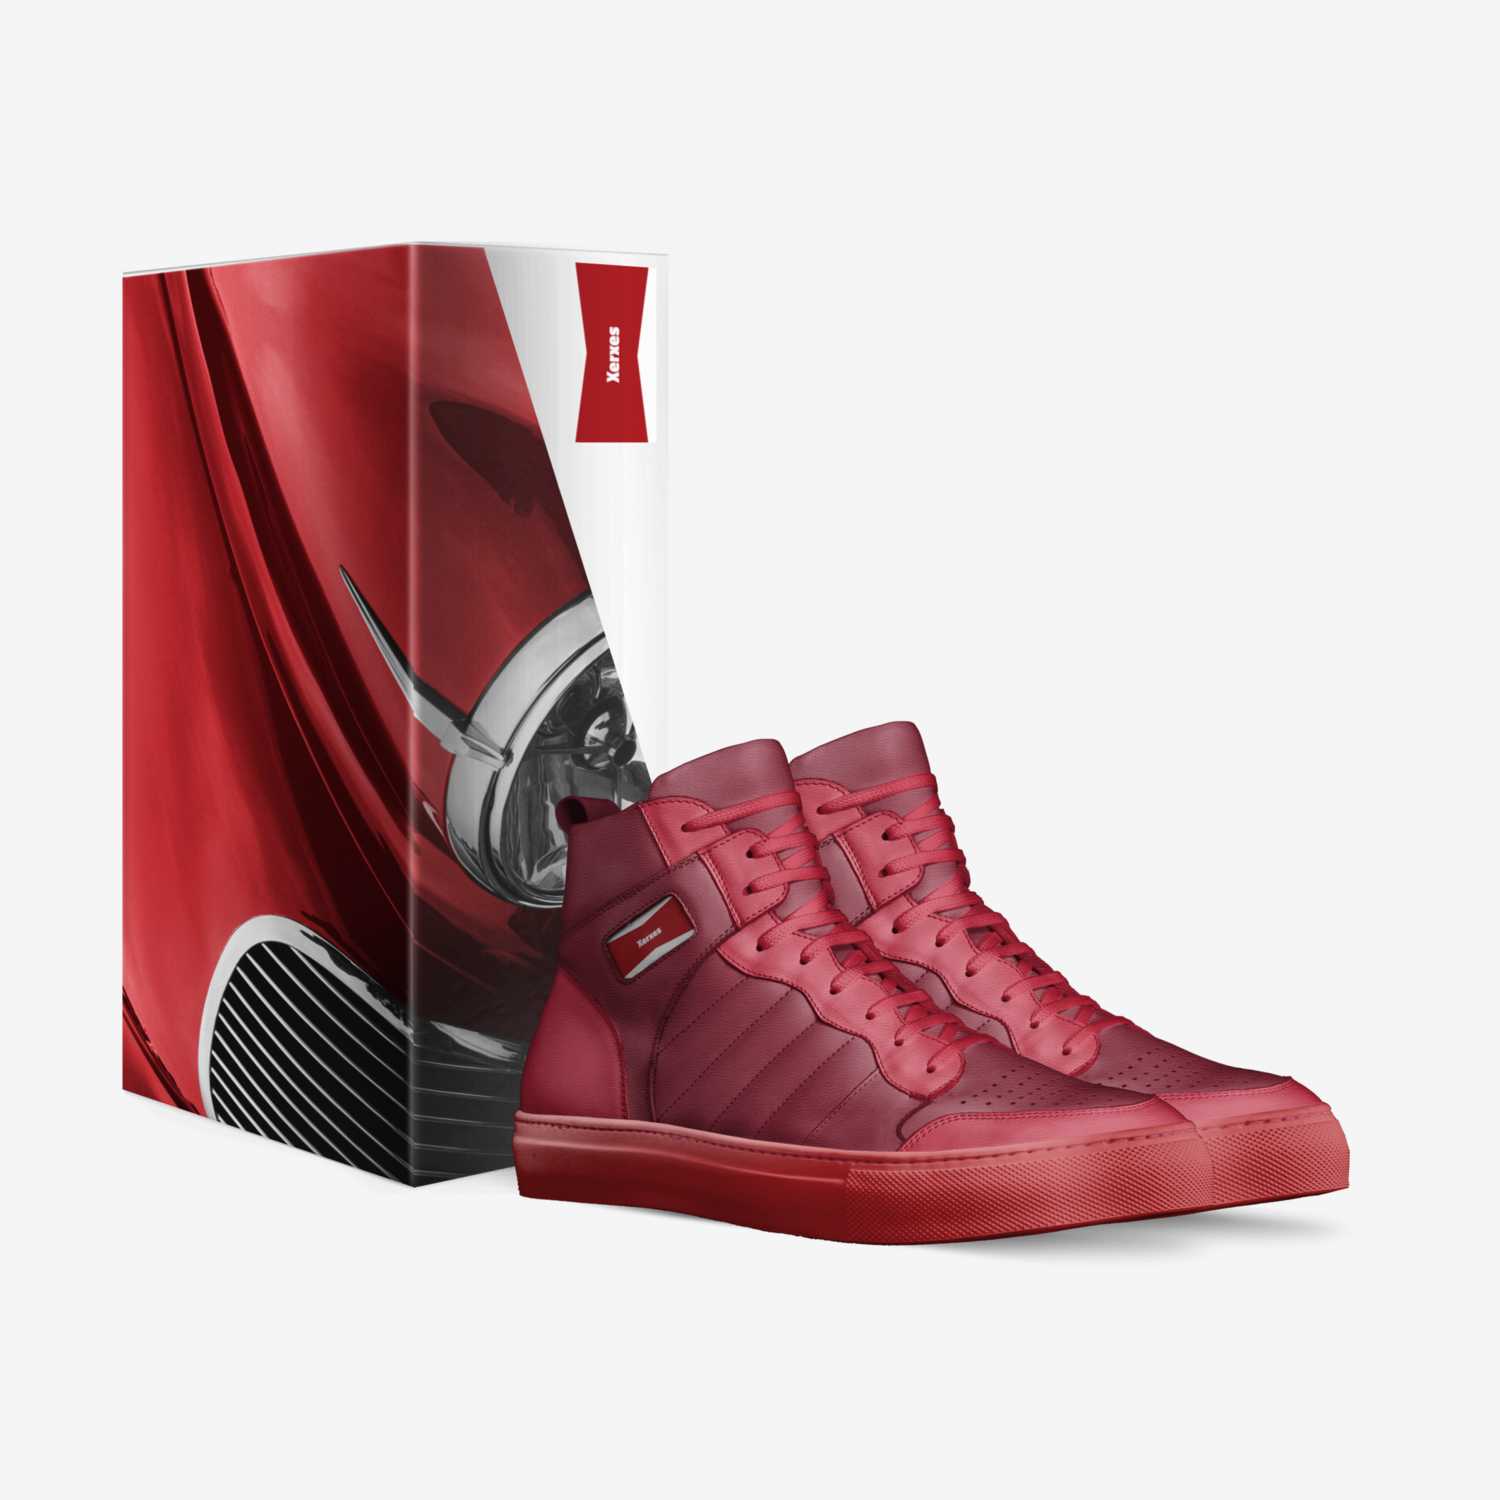 Xerxes custom made in Italy shoes by Eric Ridgeway | Box view